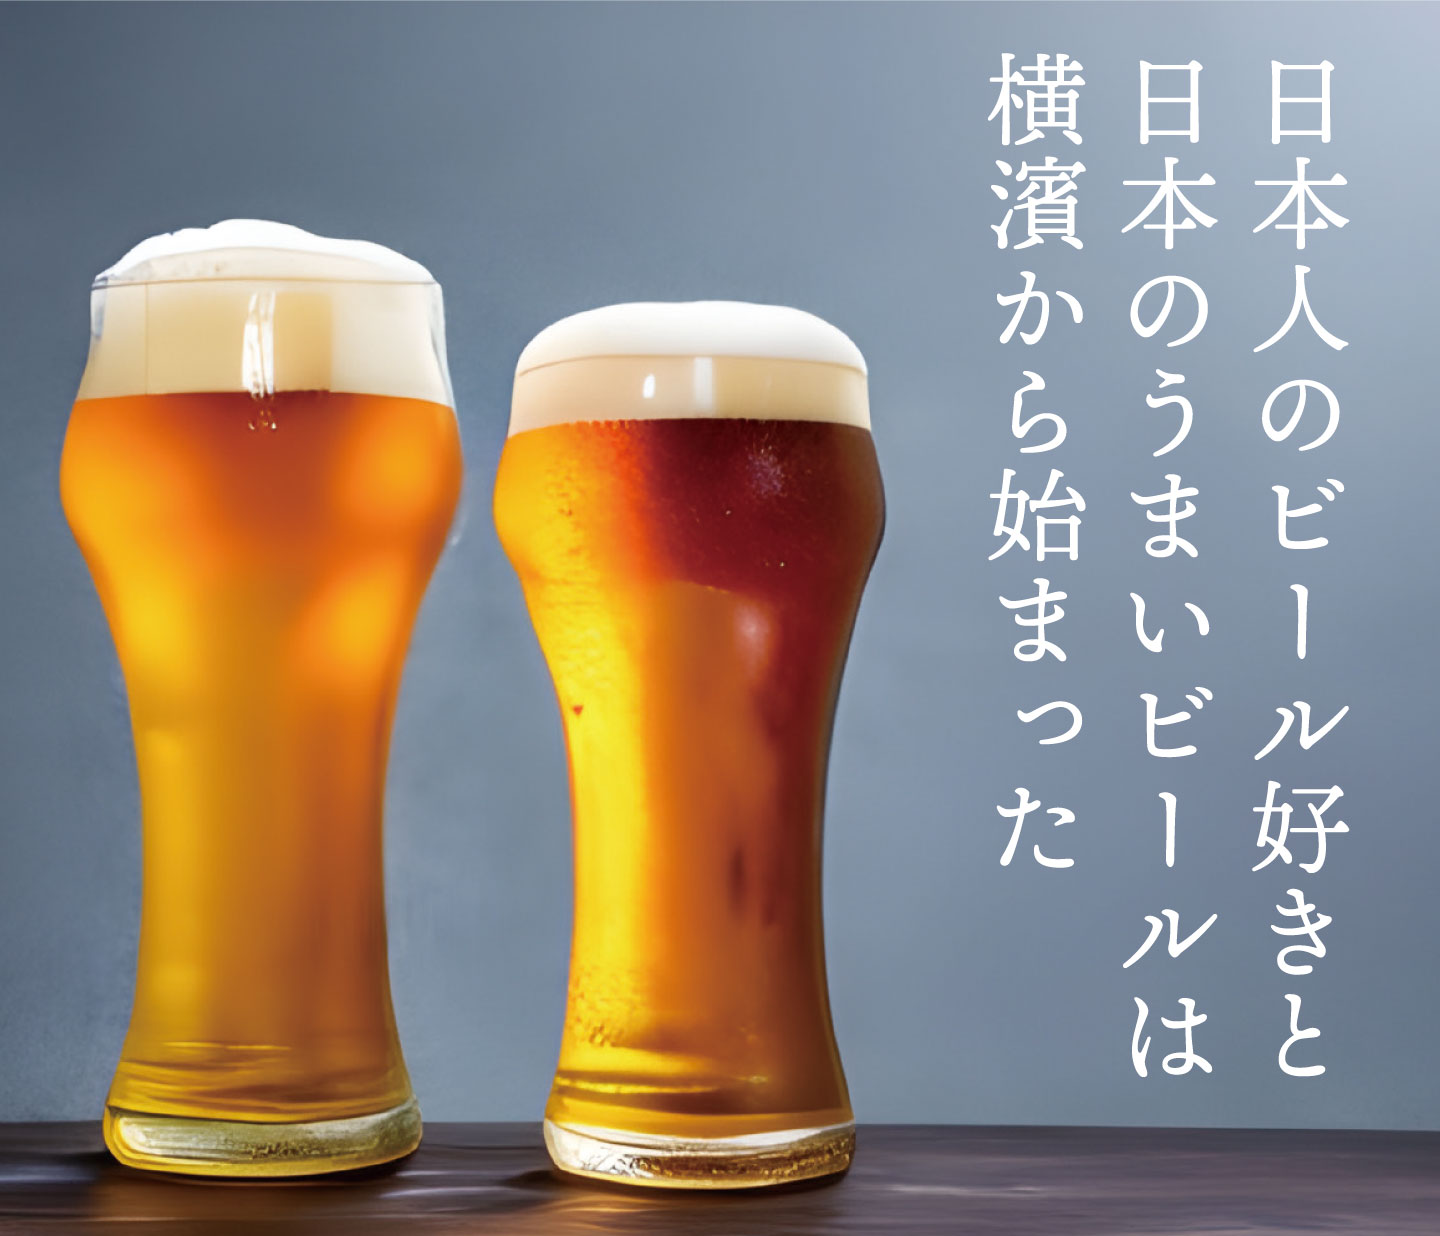 kv-yokohama-beer